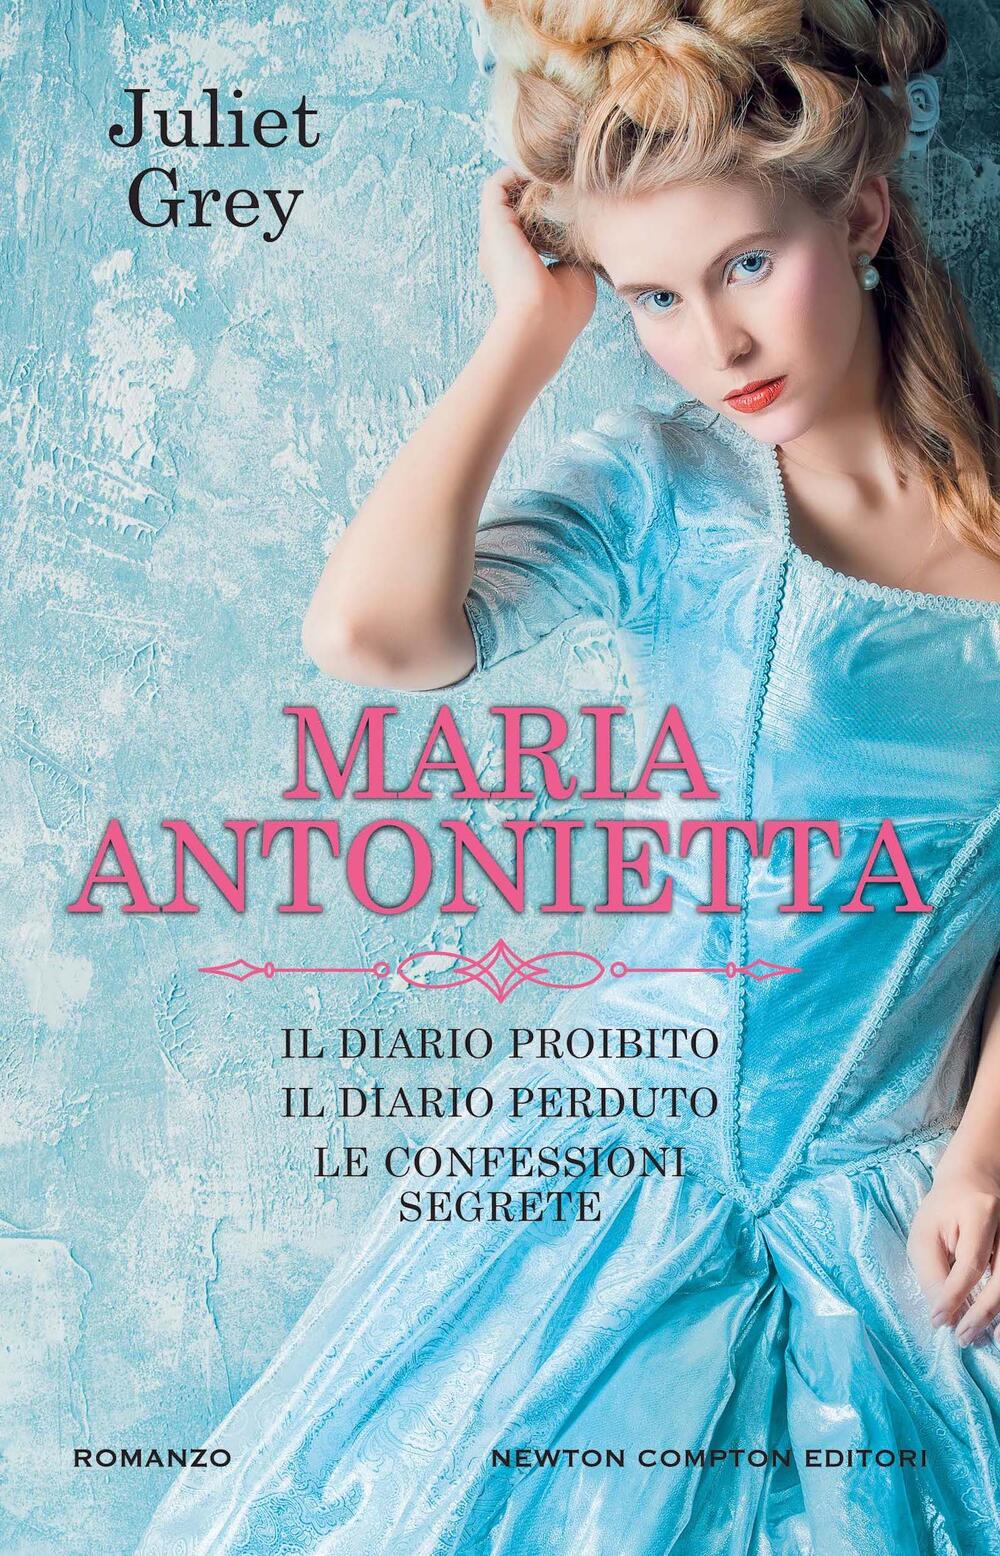 Recensione “Maria Antonietta” di Juliet Grey